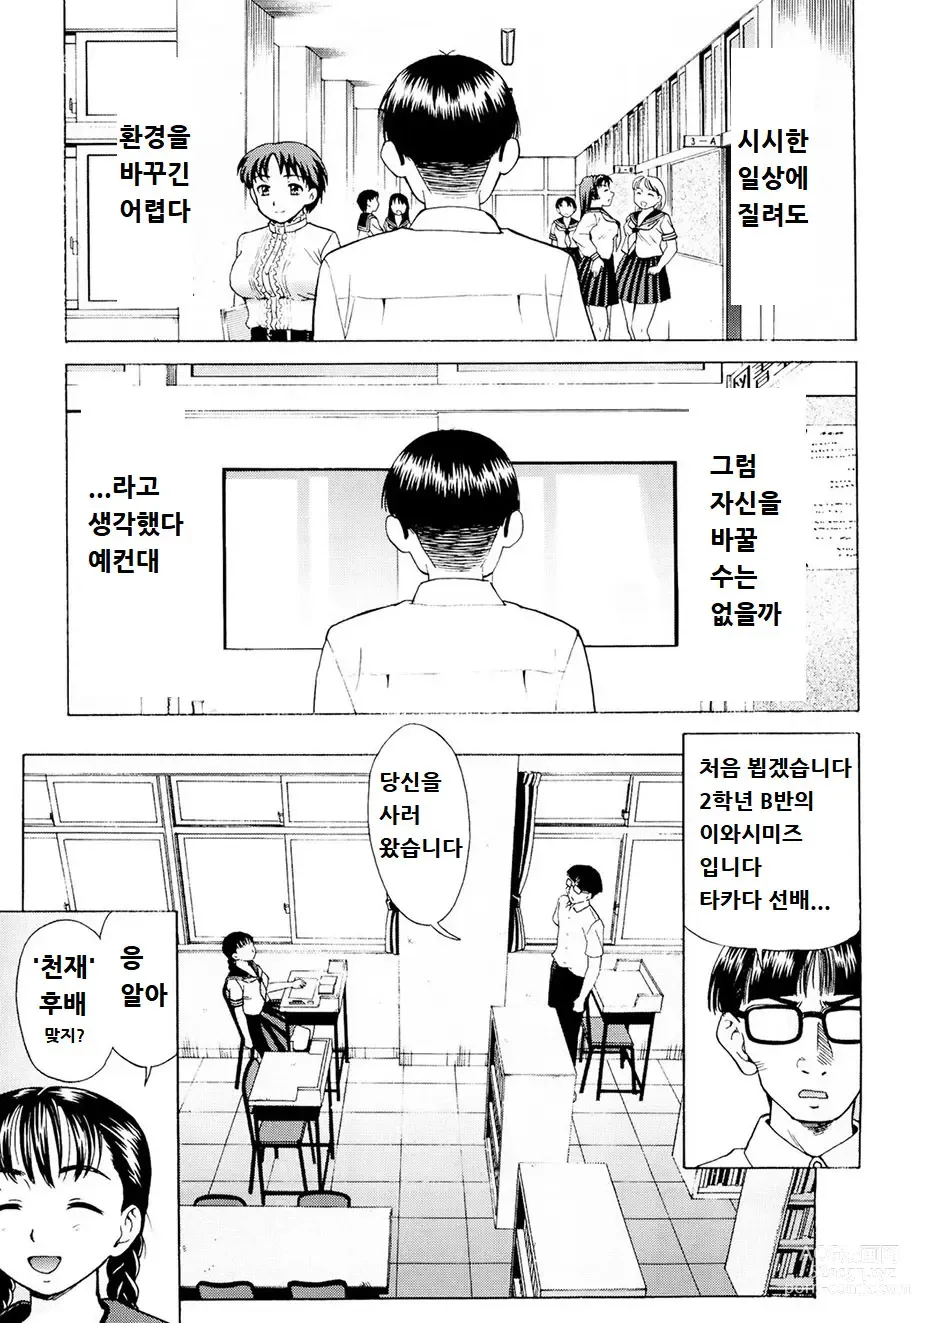 Page 2 of manga 도서실은 방과후의 창관 ~해질녘의 동정군~